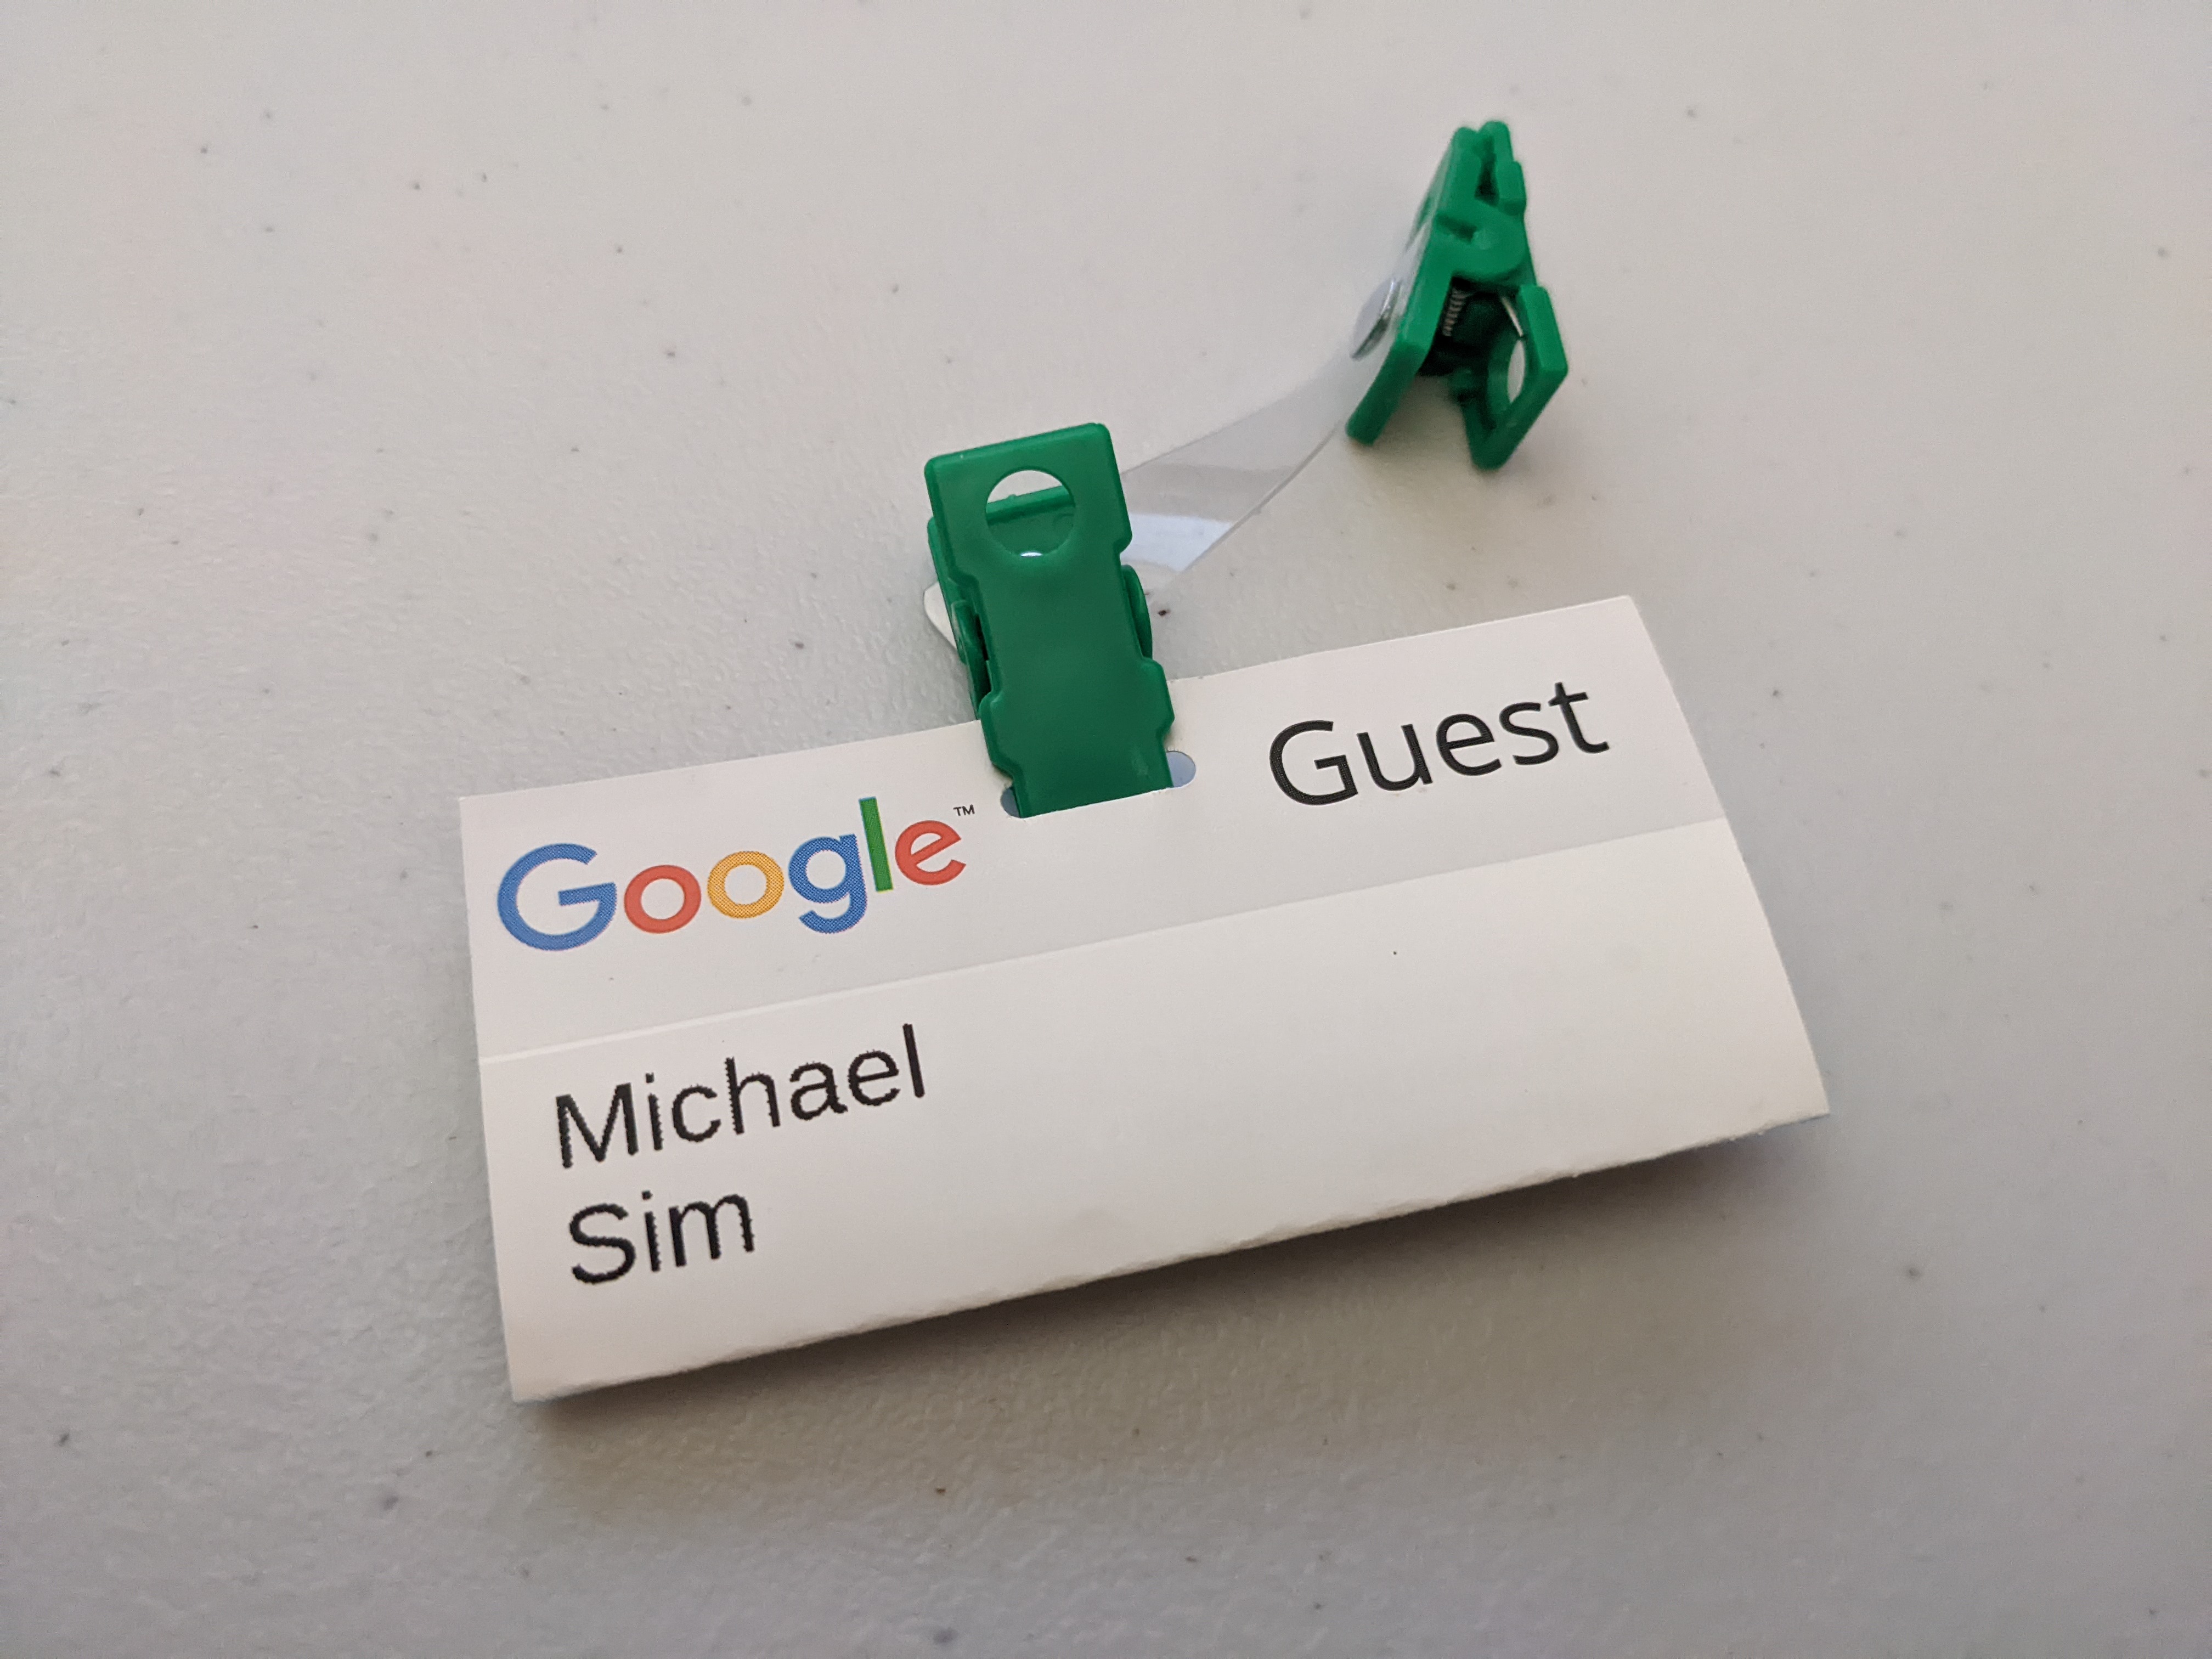 google-guest-michaelssim.jpg